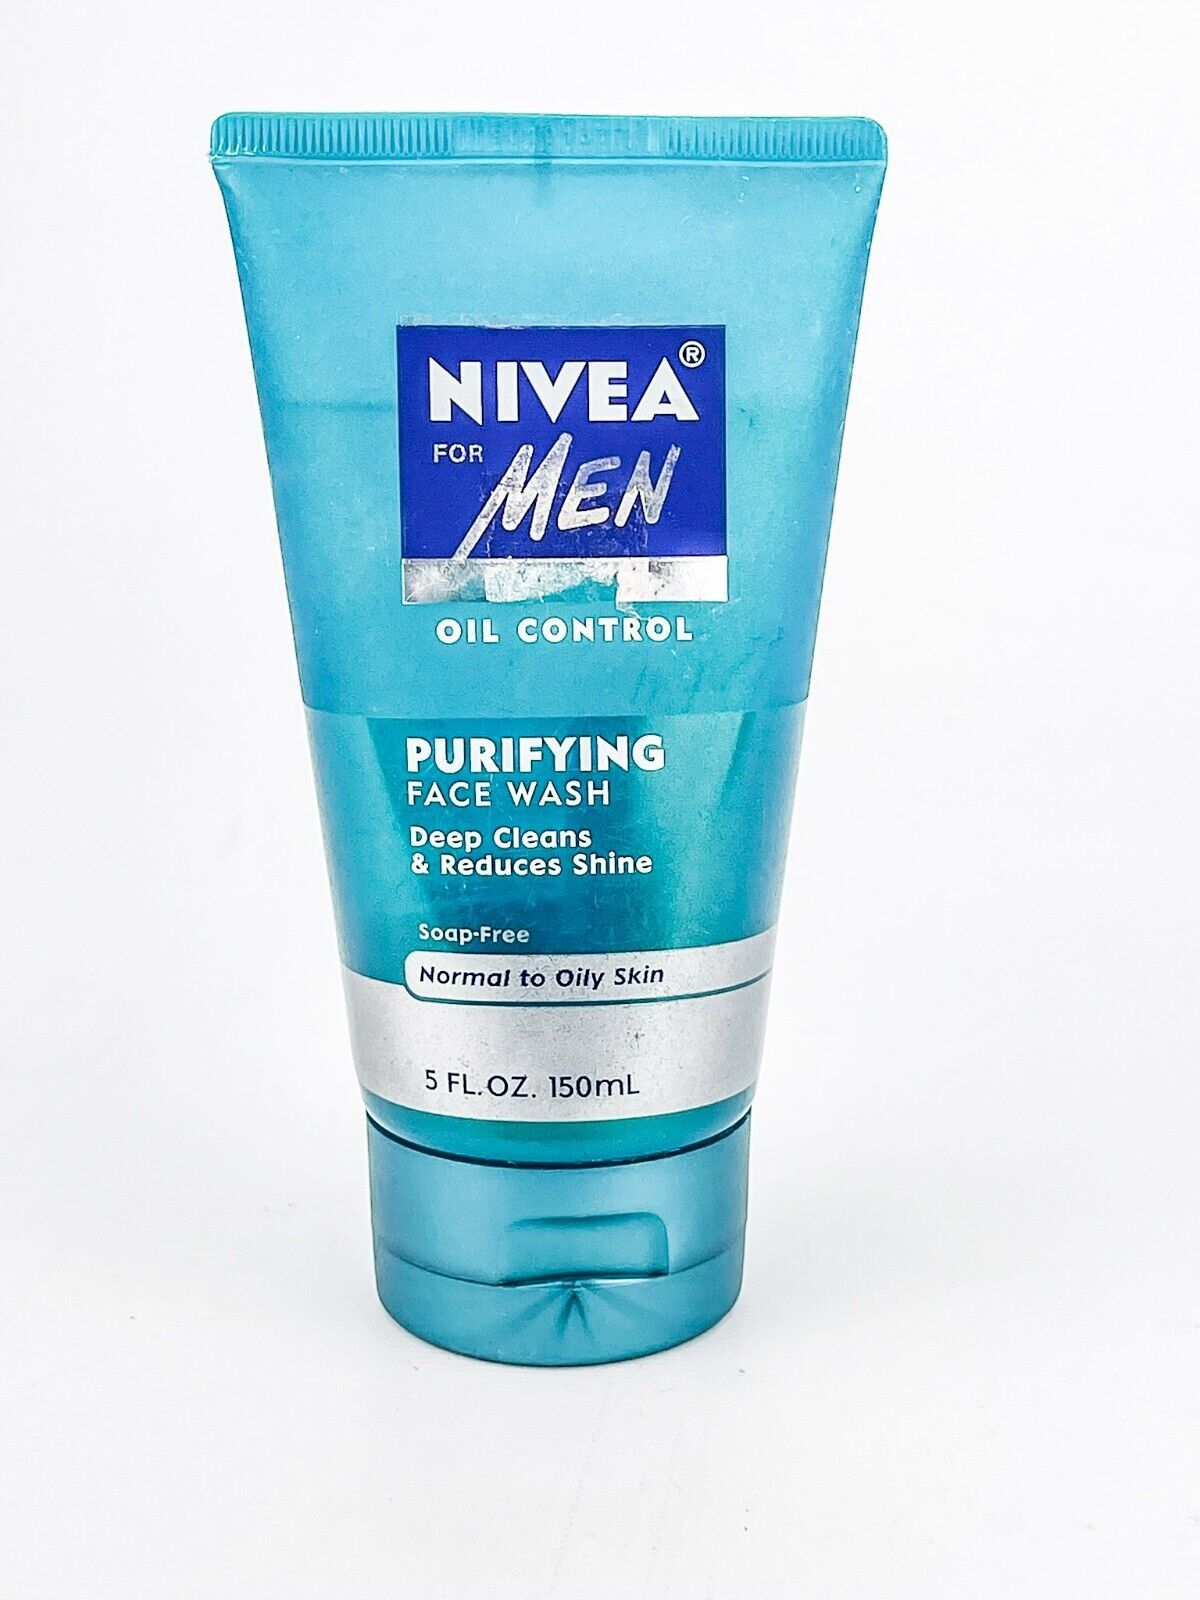 Nivea For Men Oil Control Purifying Face Wash Soap Free Original Formula 5 oz - $28.98